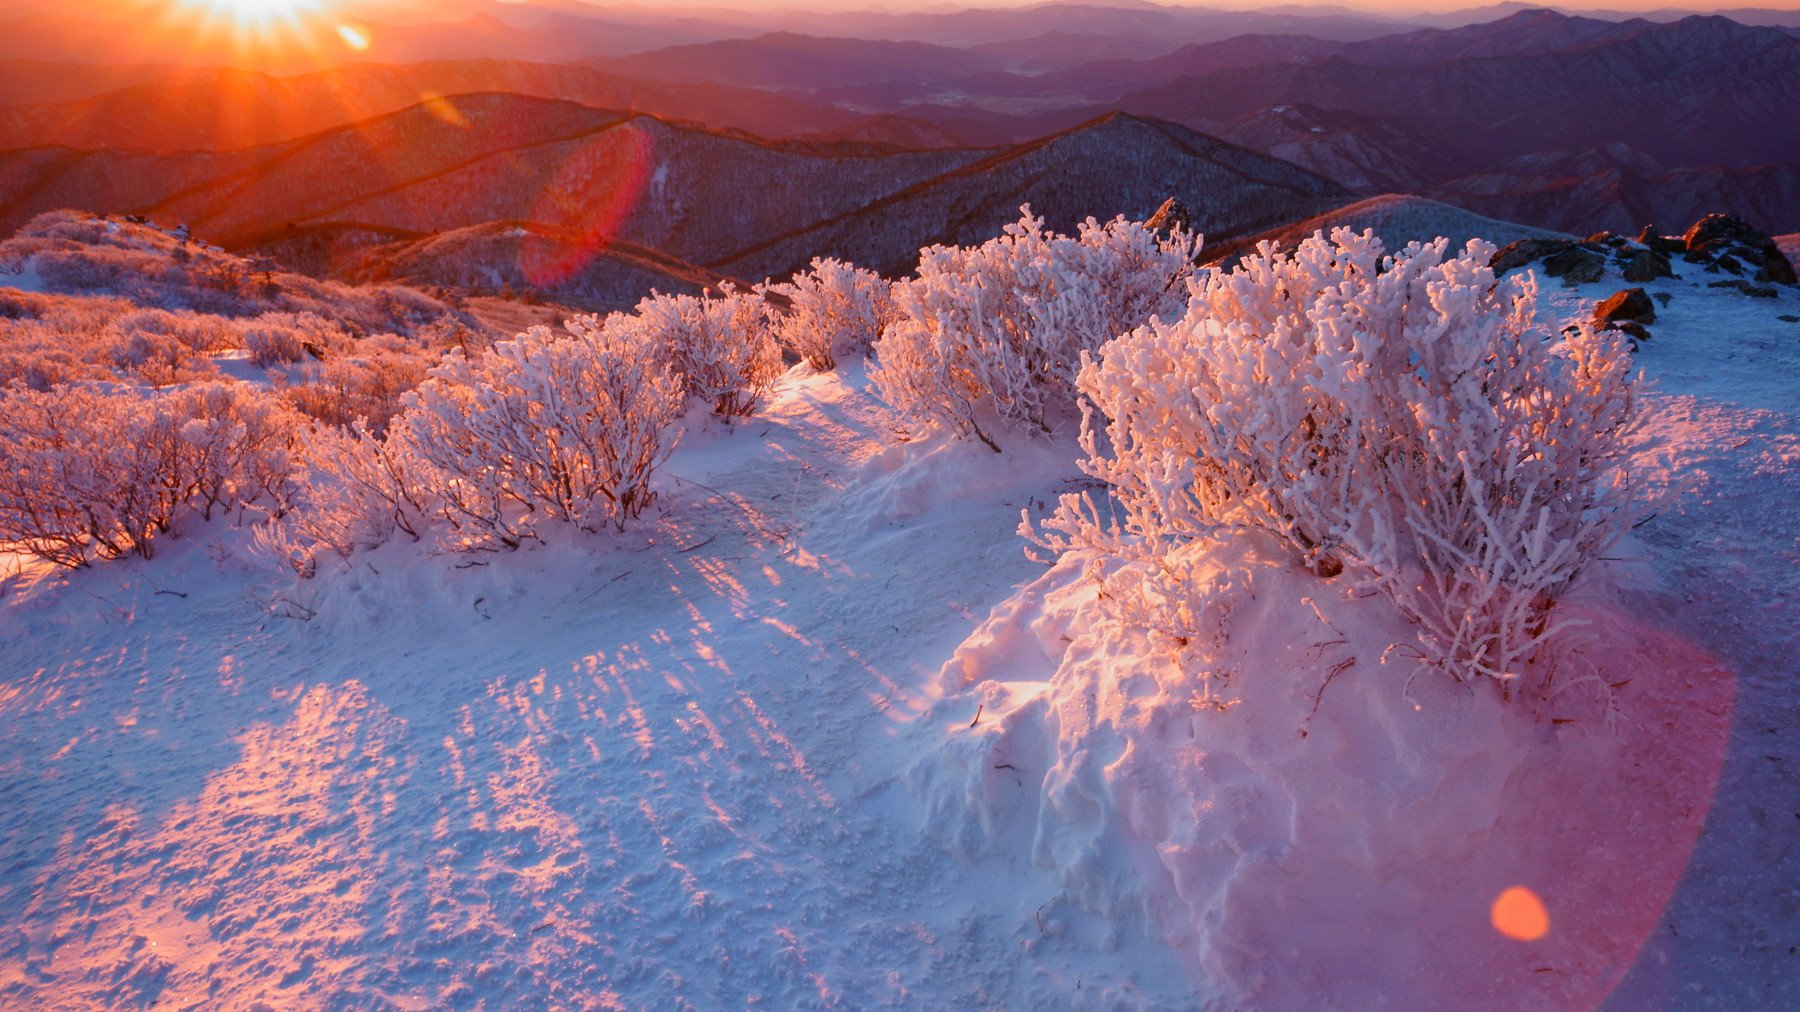 south korea,sunrise,winter,mountain,snow, rime ice, sun,sunlight,trees,landscape, Shin